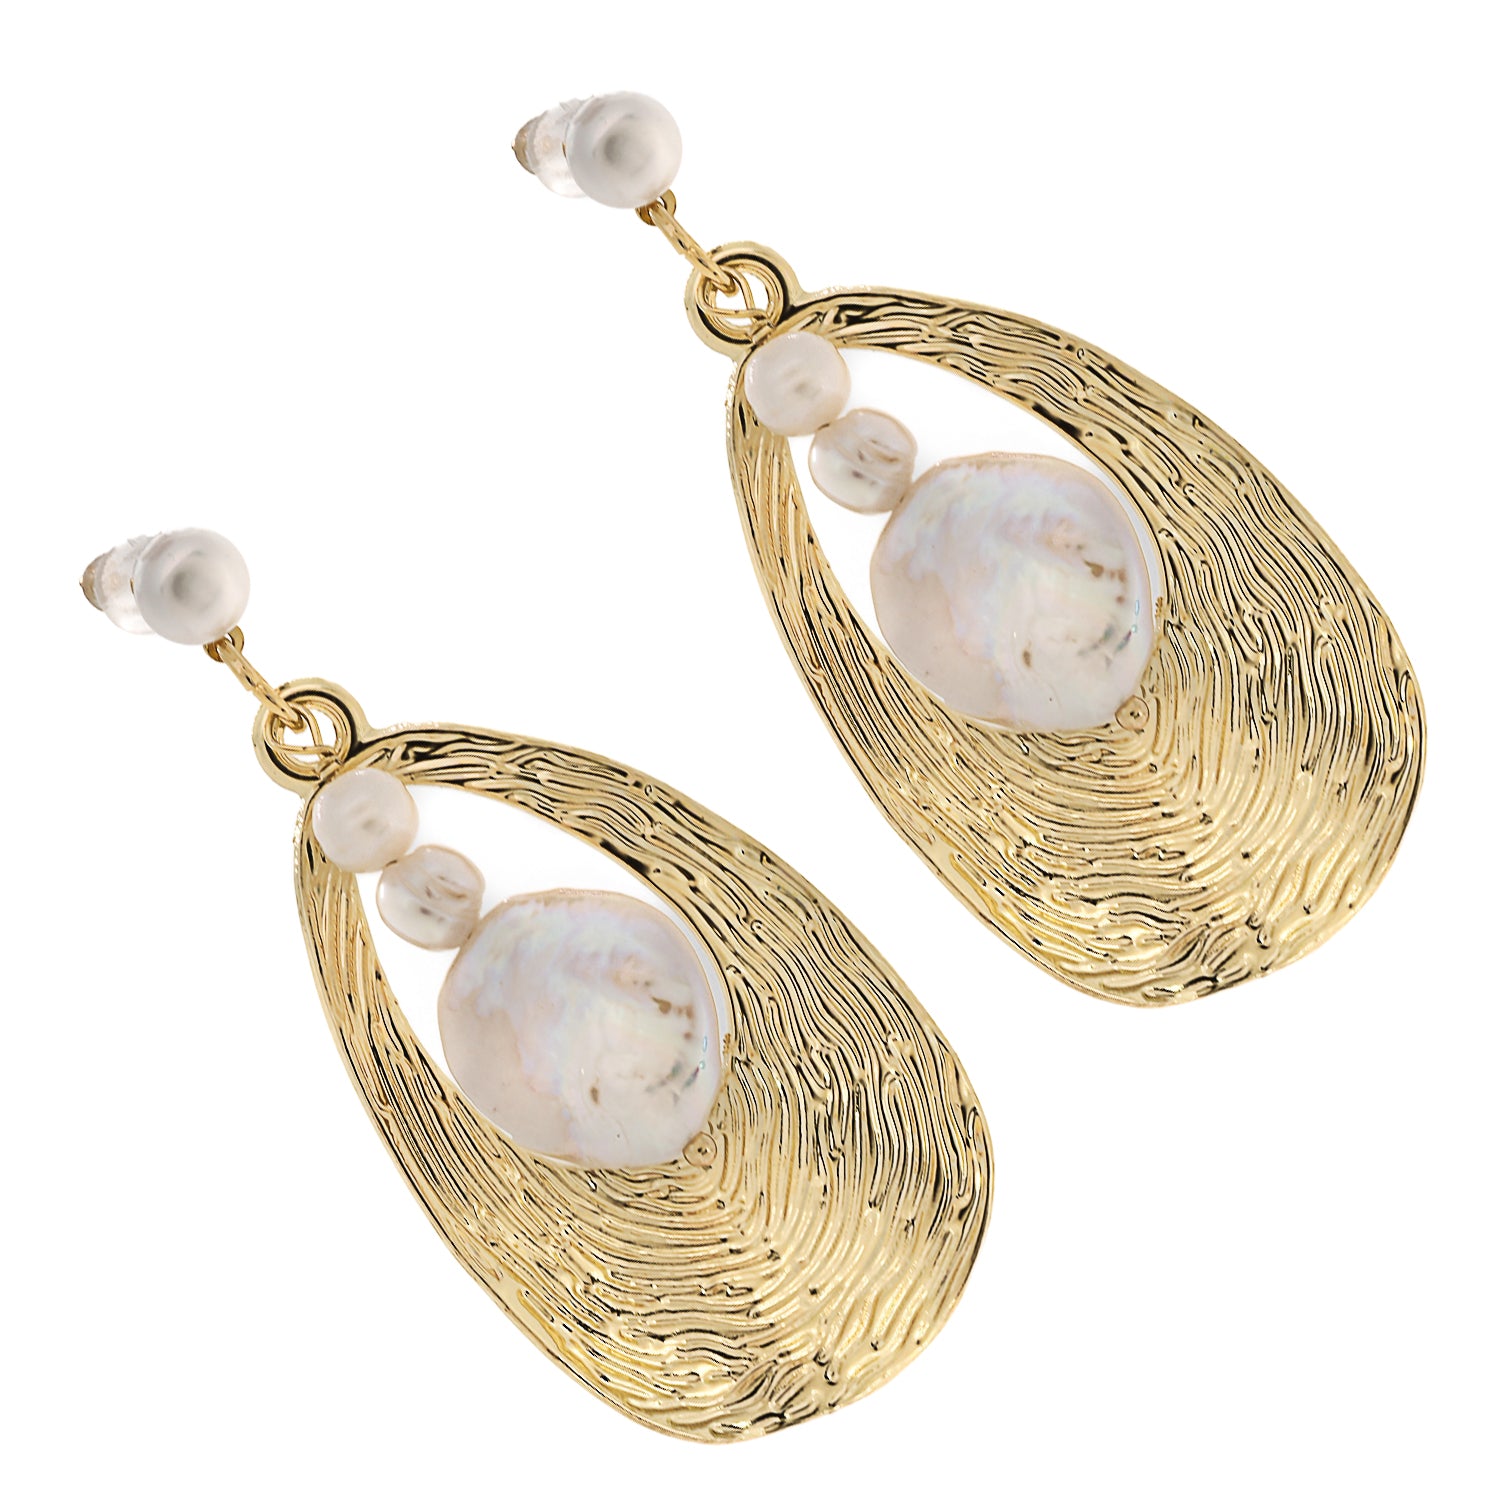 Dance of Light: Gold & Pearl Dangle Earrings, Artisanal Beauty.